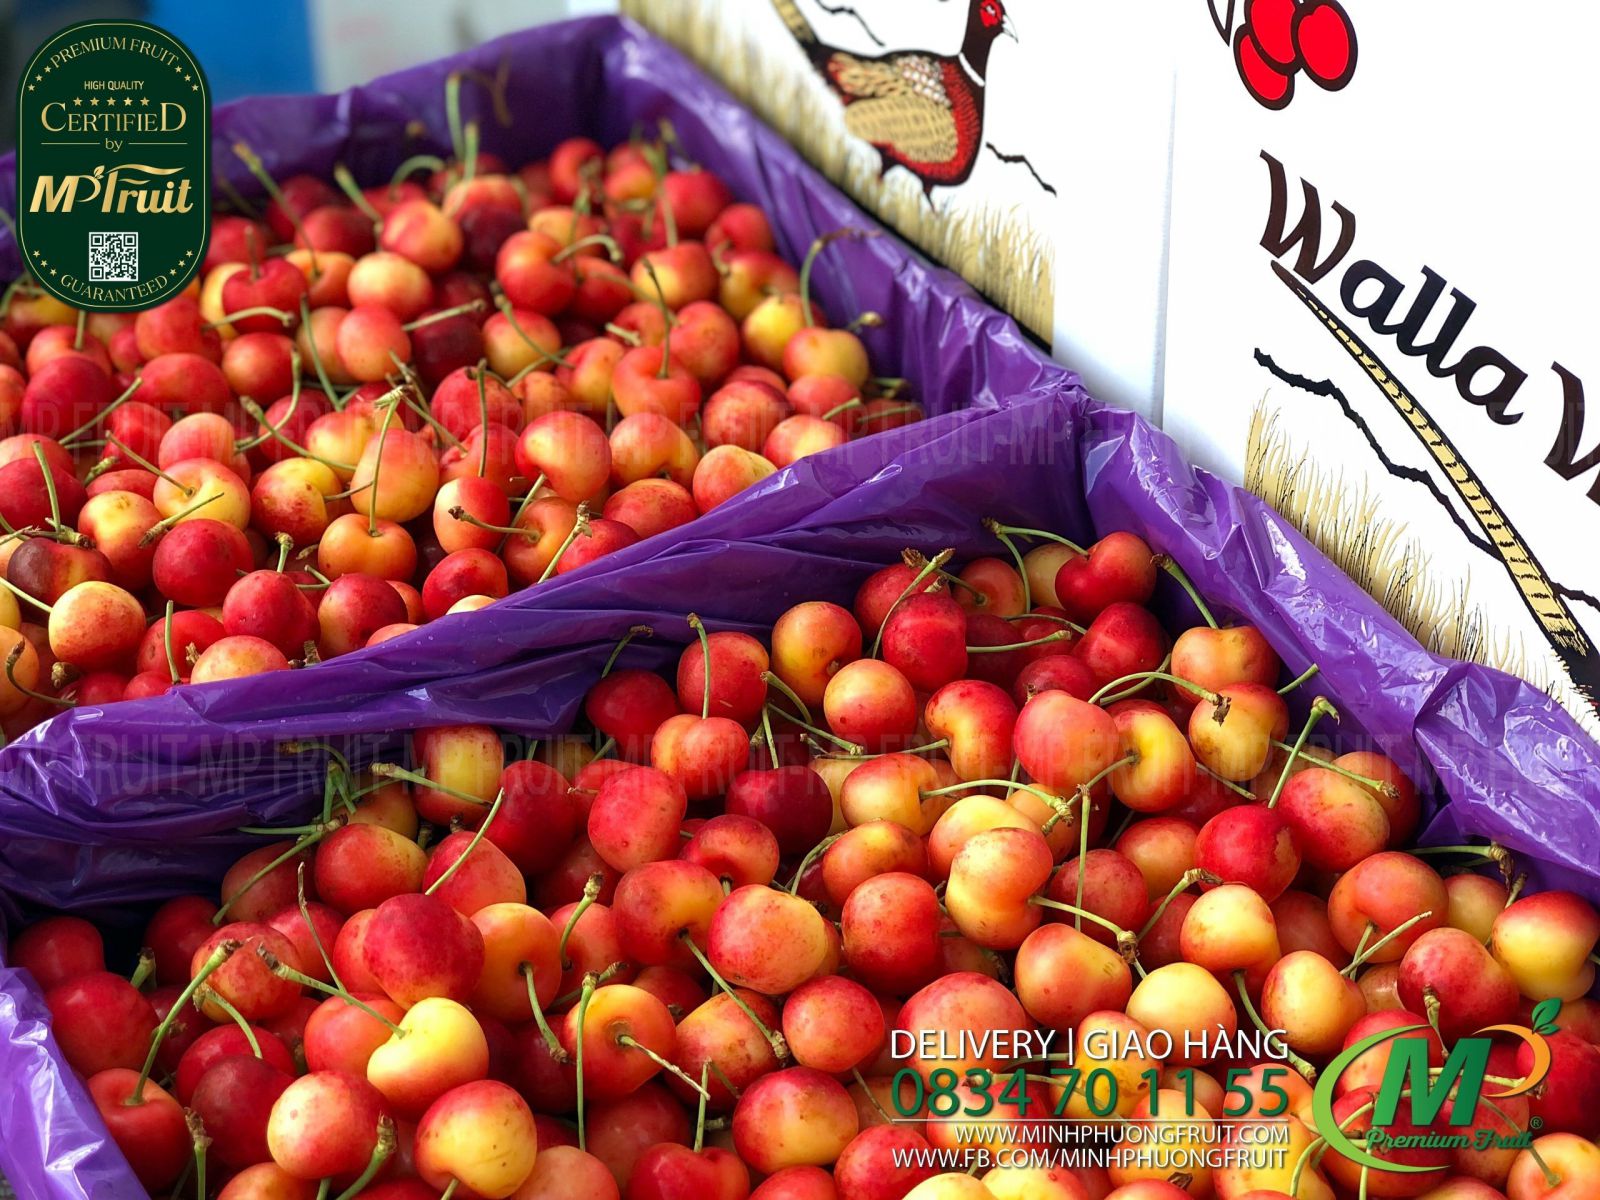 Cherry Vàng Mỹ - Rainier Cherry USA | Walla Walla tại MP Fruits